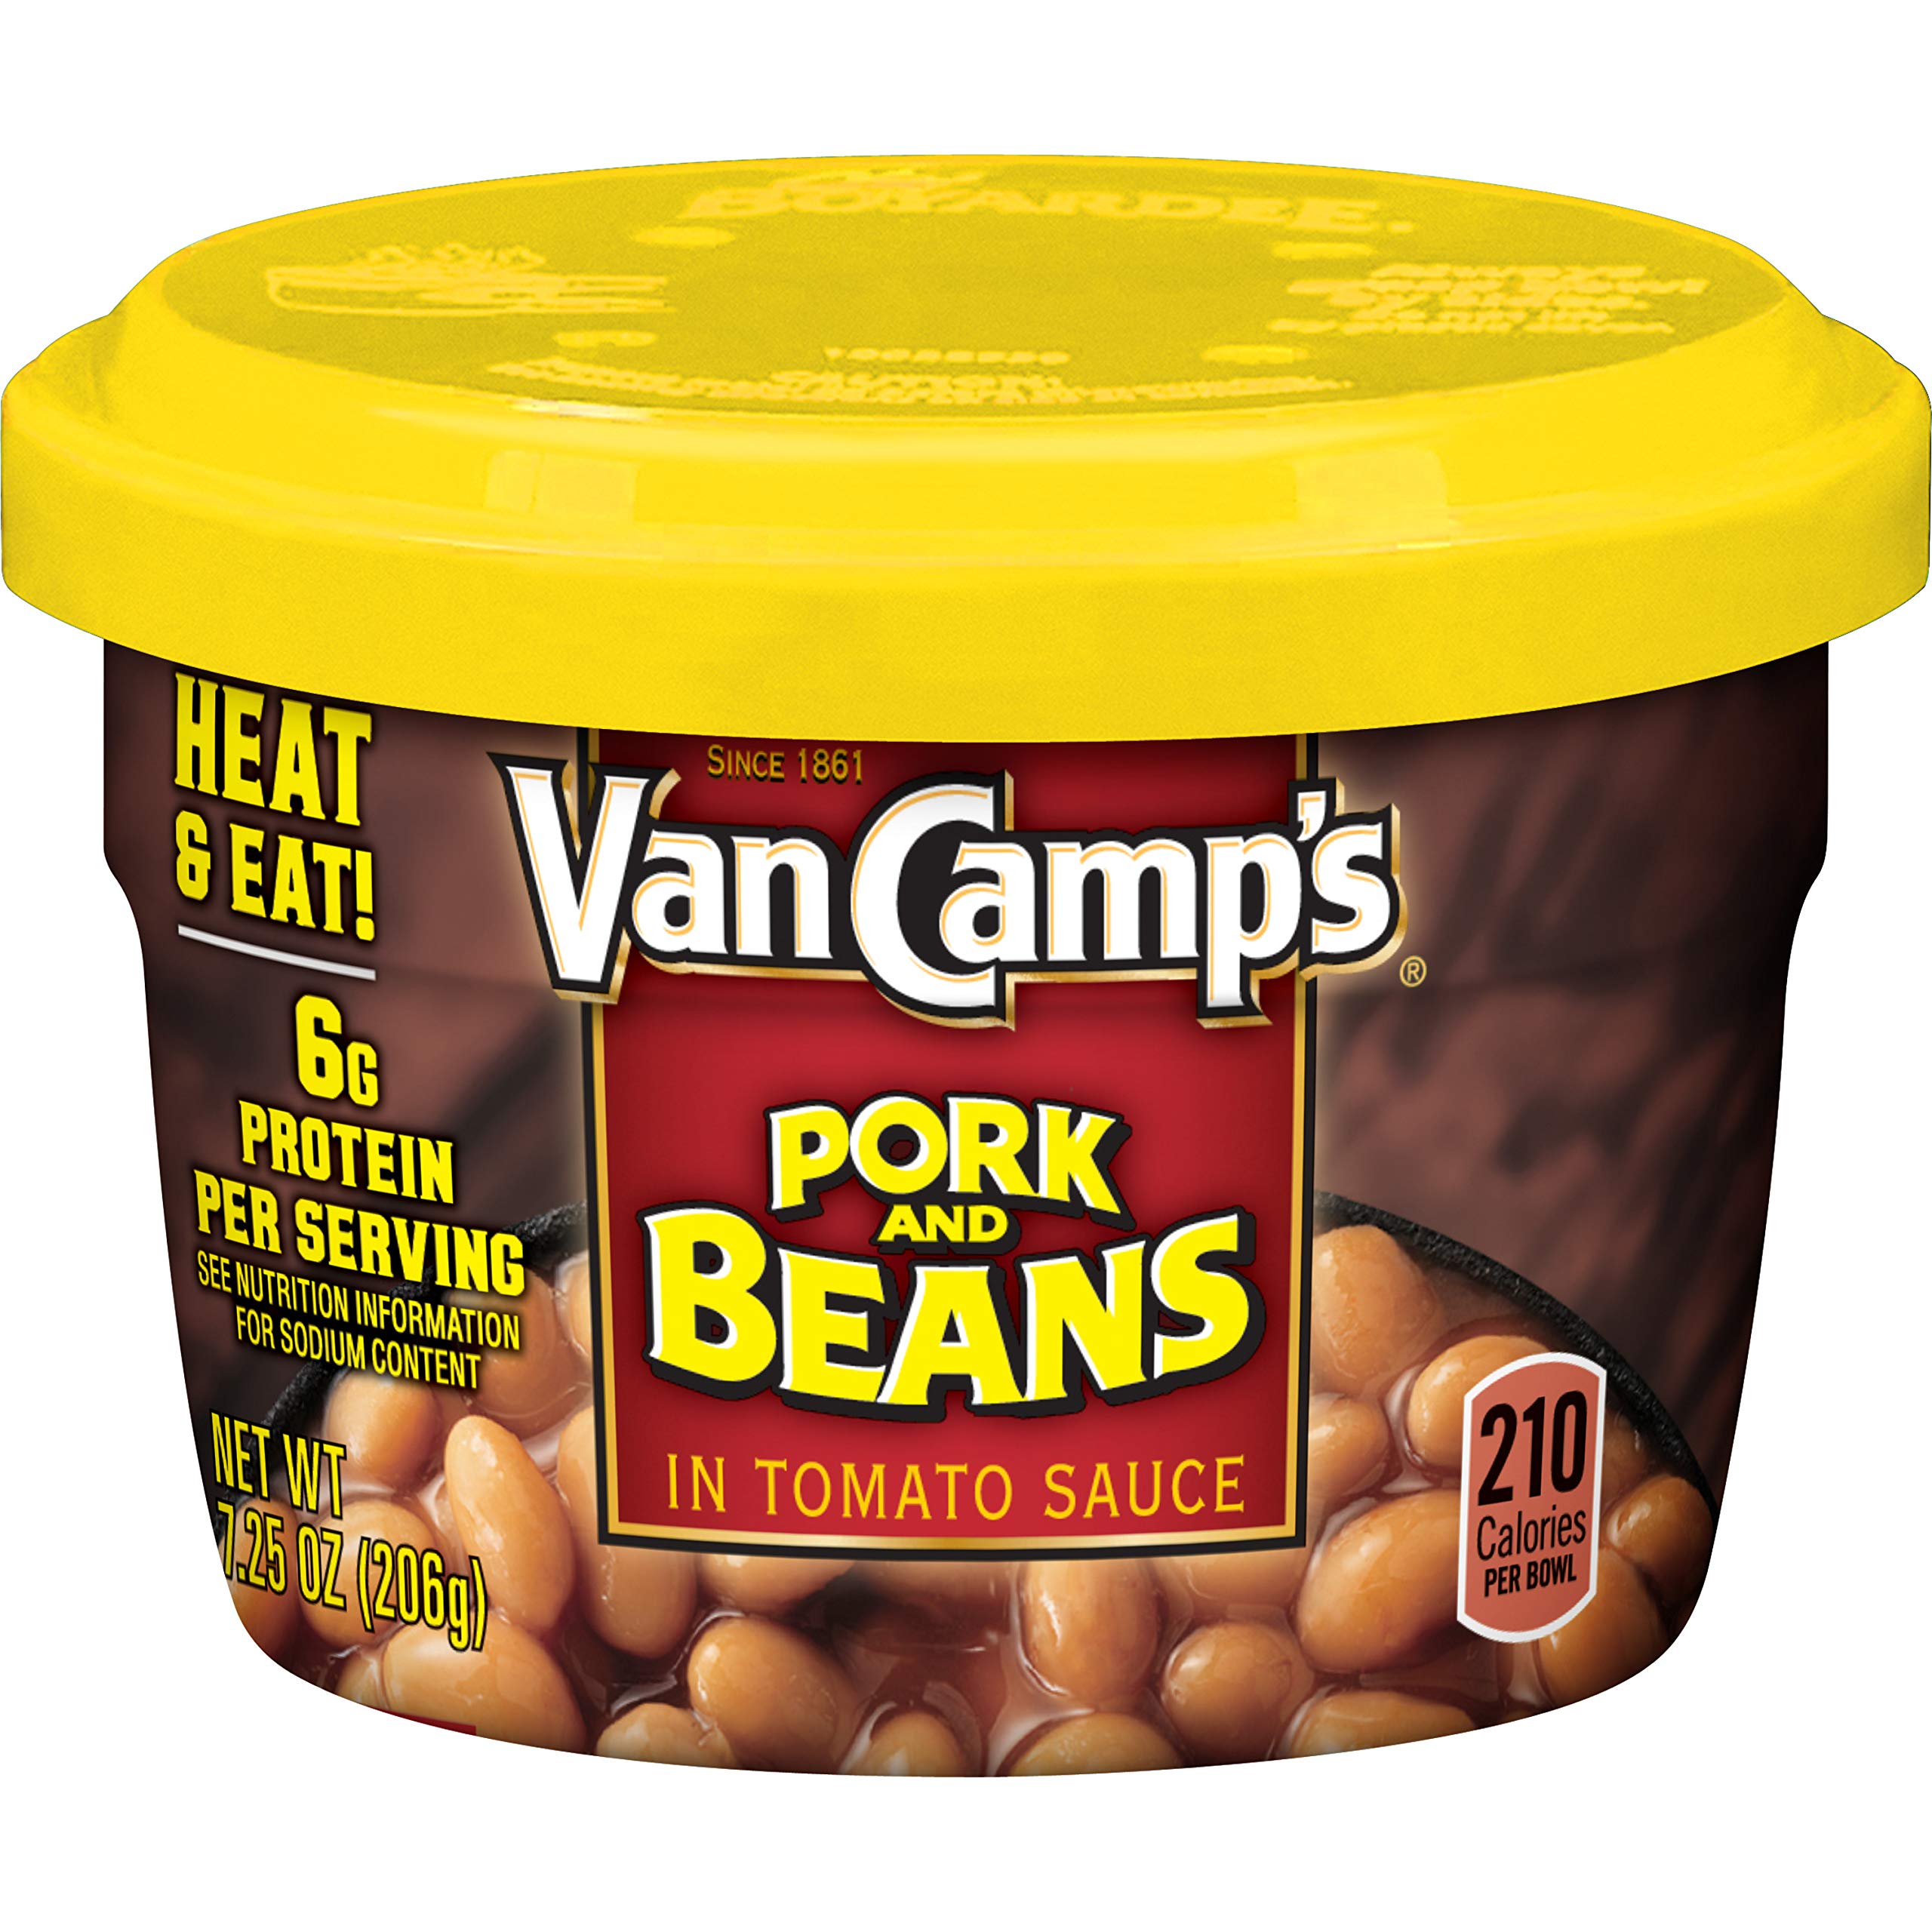 Amazon.com : Van Camp's Pork & Beans Microwavable Cups, 7.25 oz : Grocery & Gourmet Food $0.28